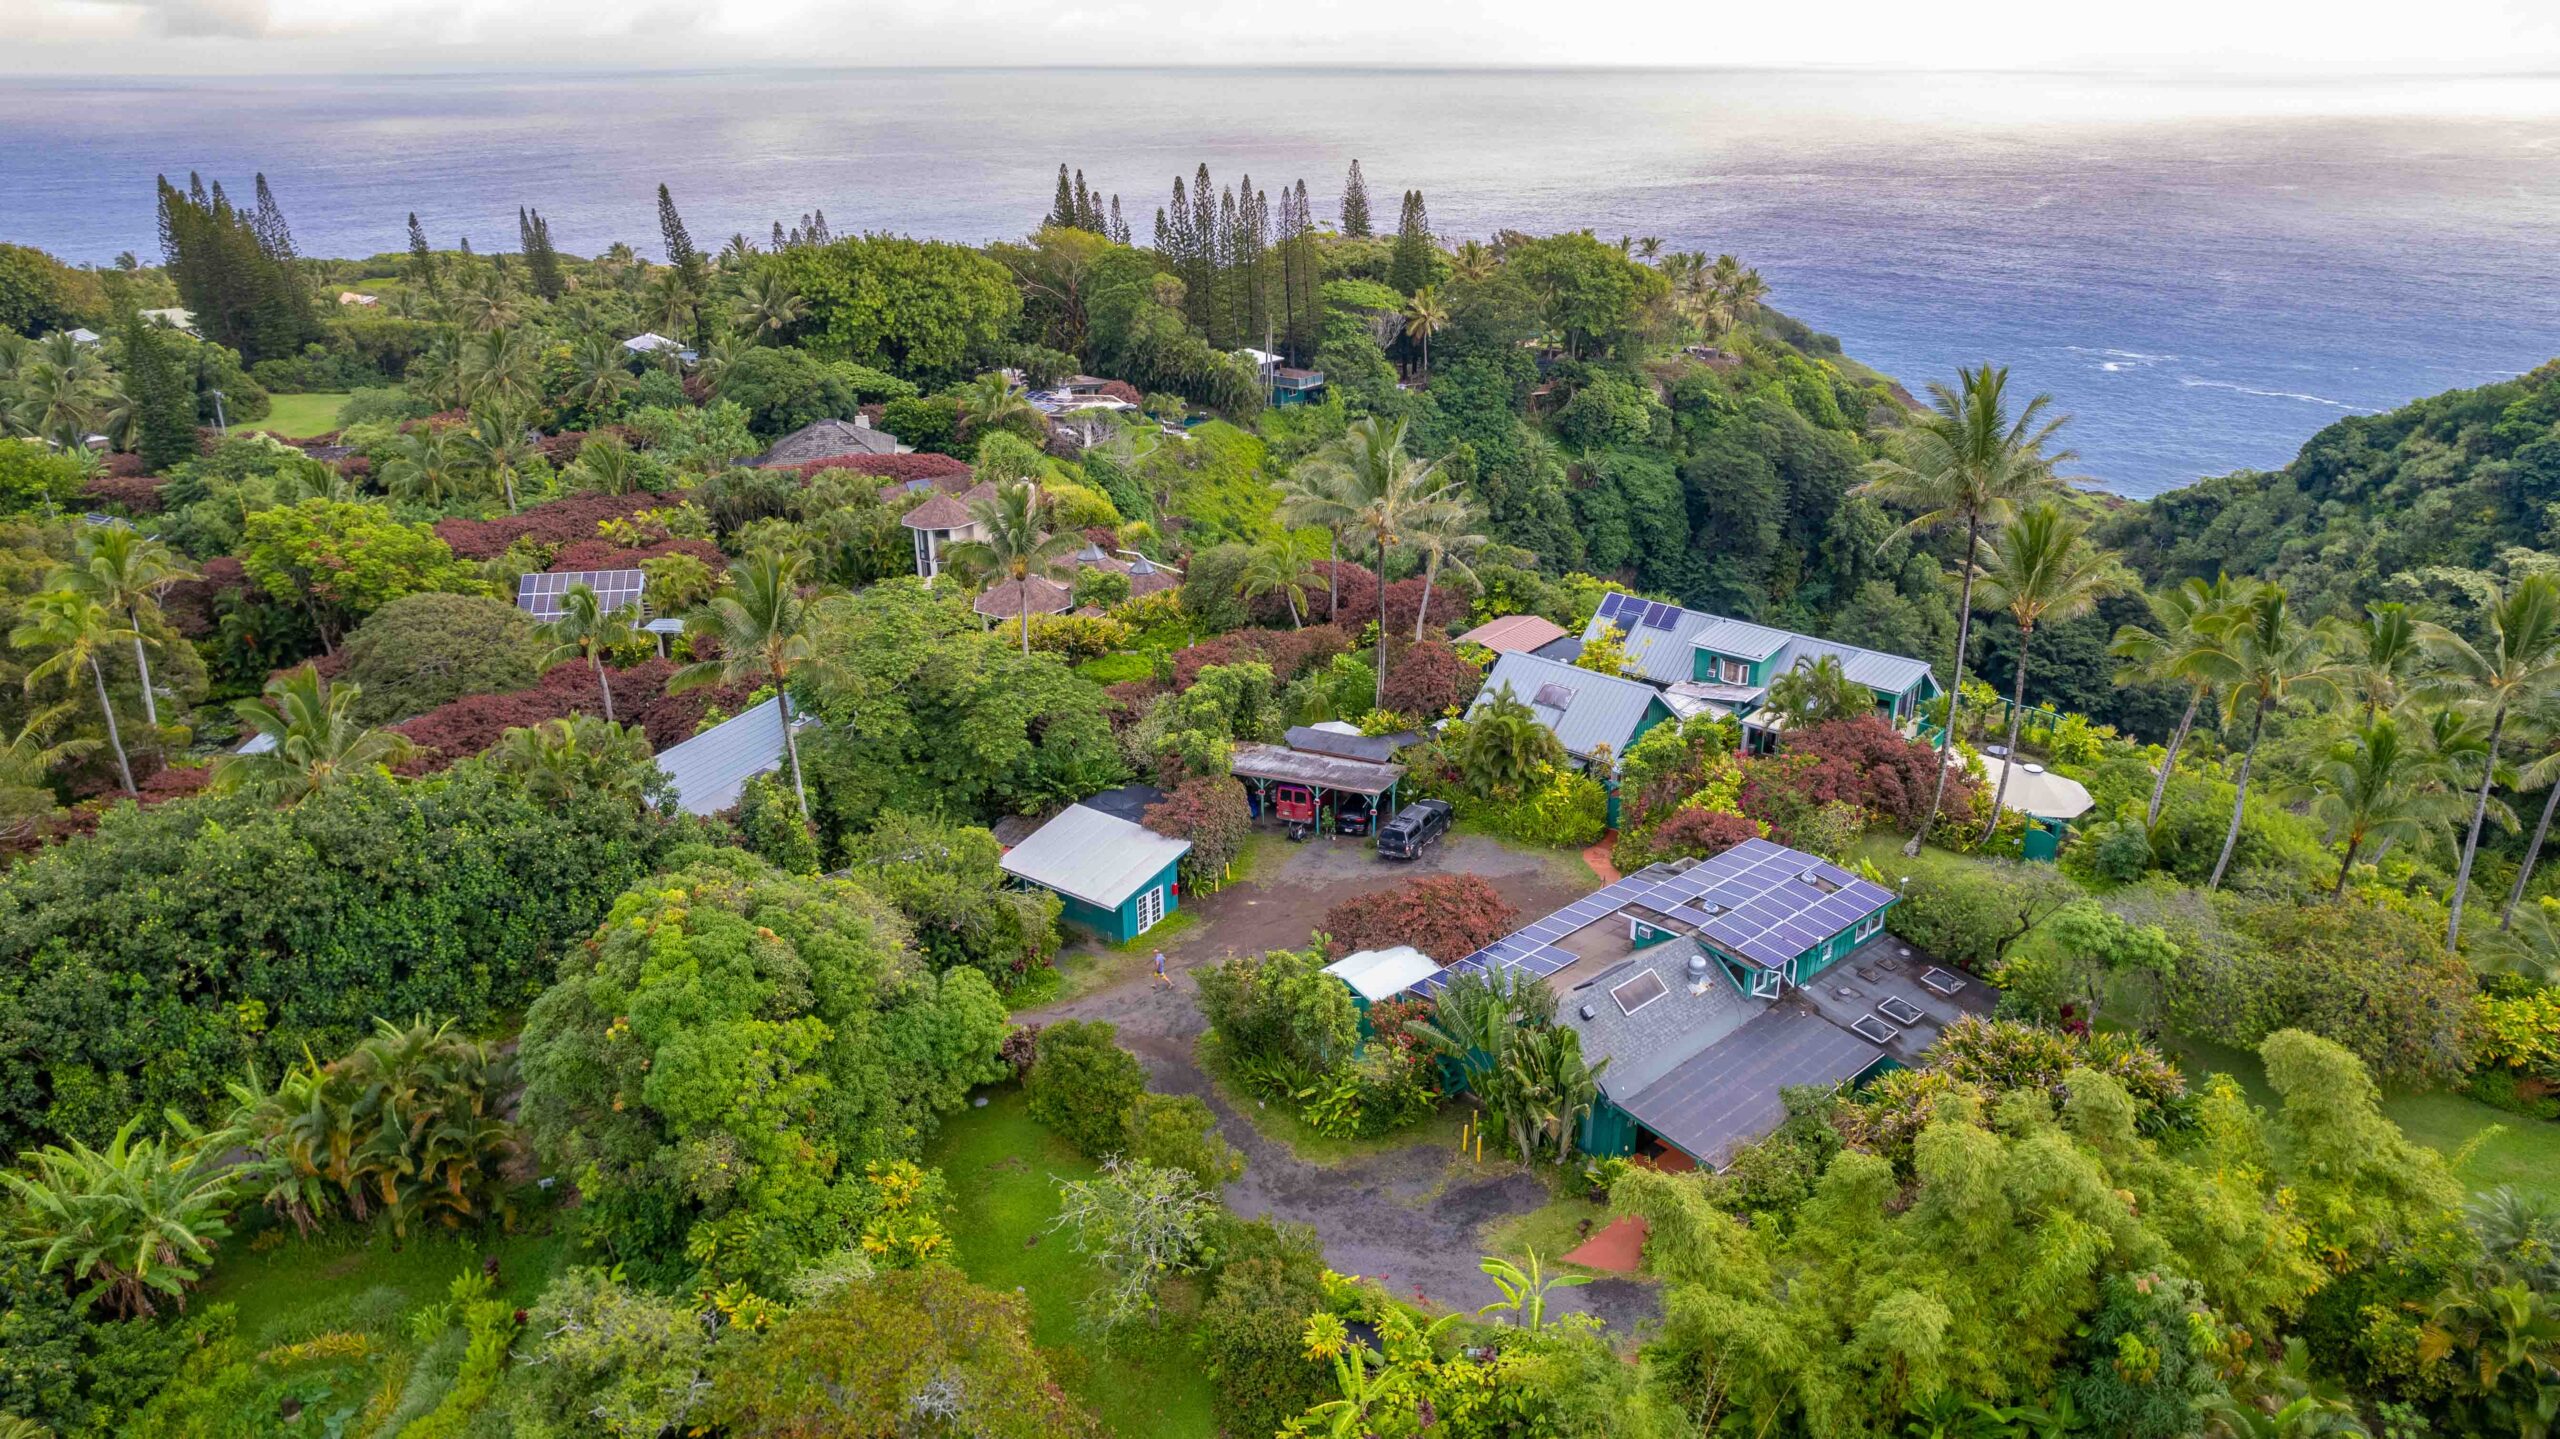 A bird's eye view of Hale Akua Eco-Retreat Center in Maui, Hawaii